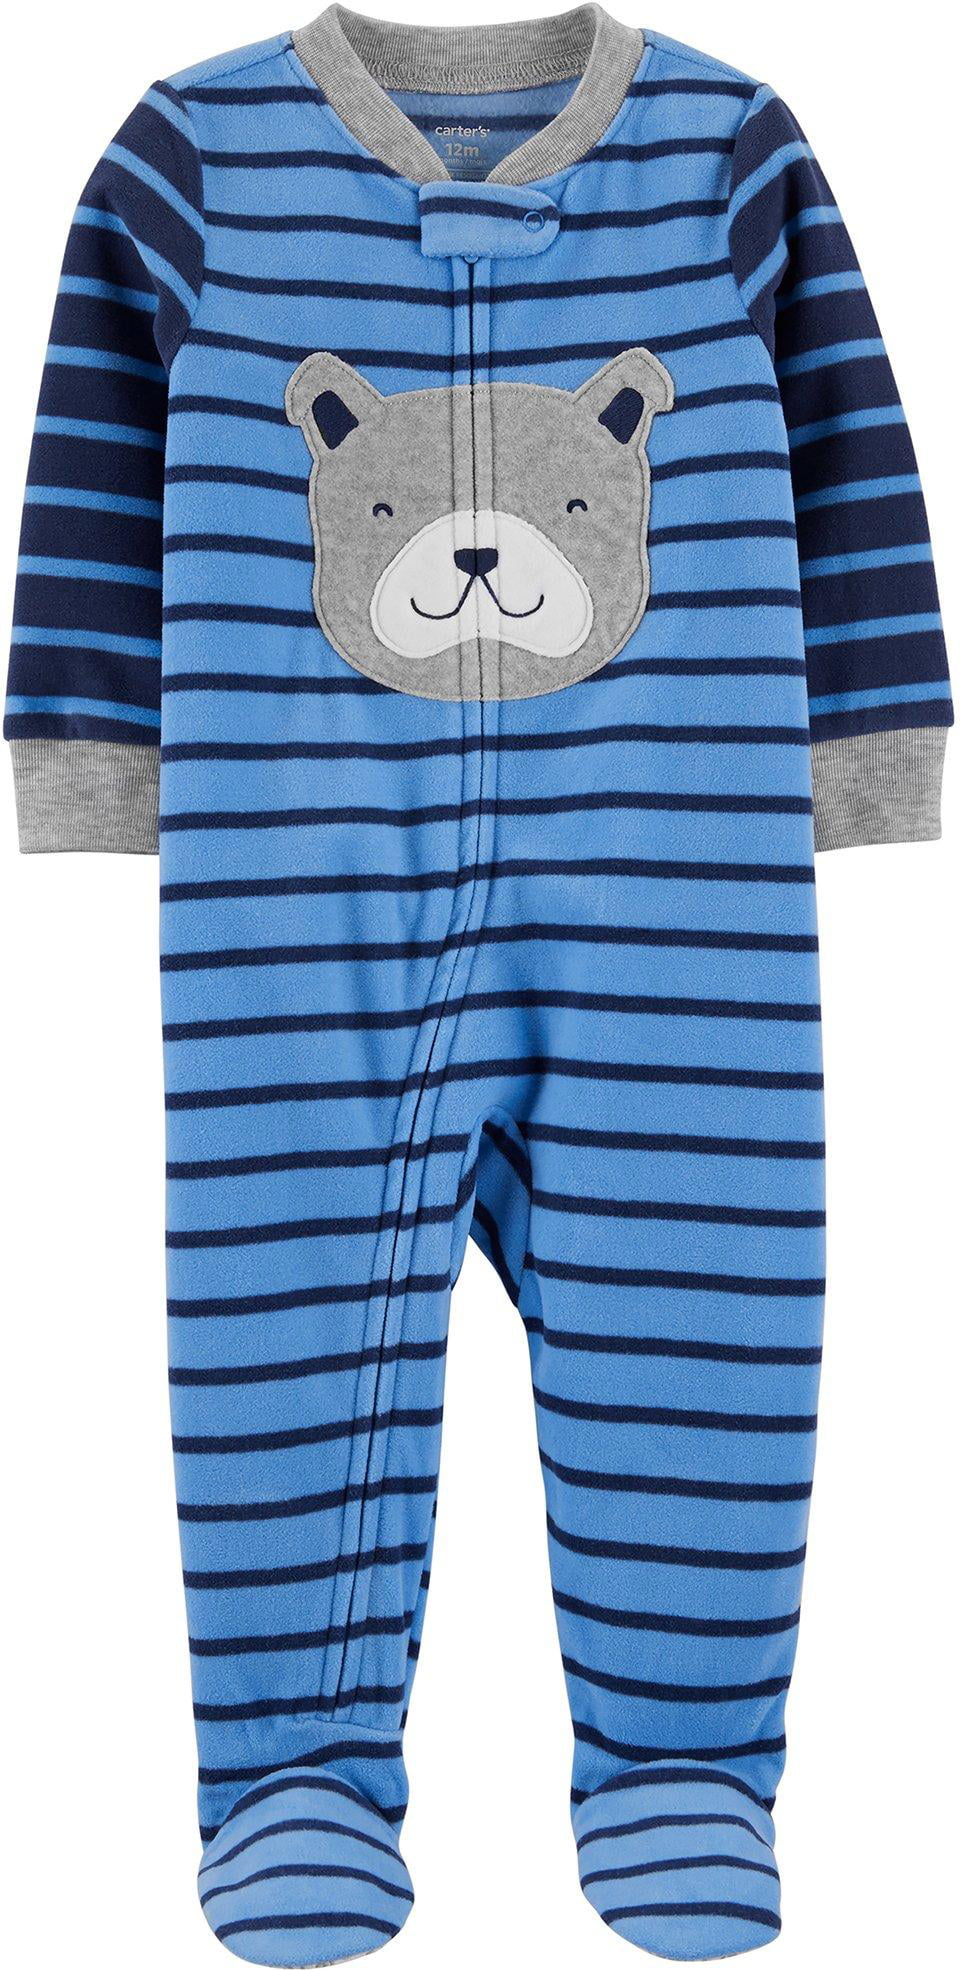 Carter's Carters Baby Boys Striped Dog Snug Fit Footie Pajamas